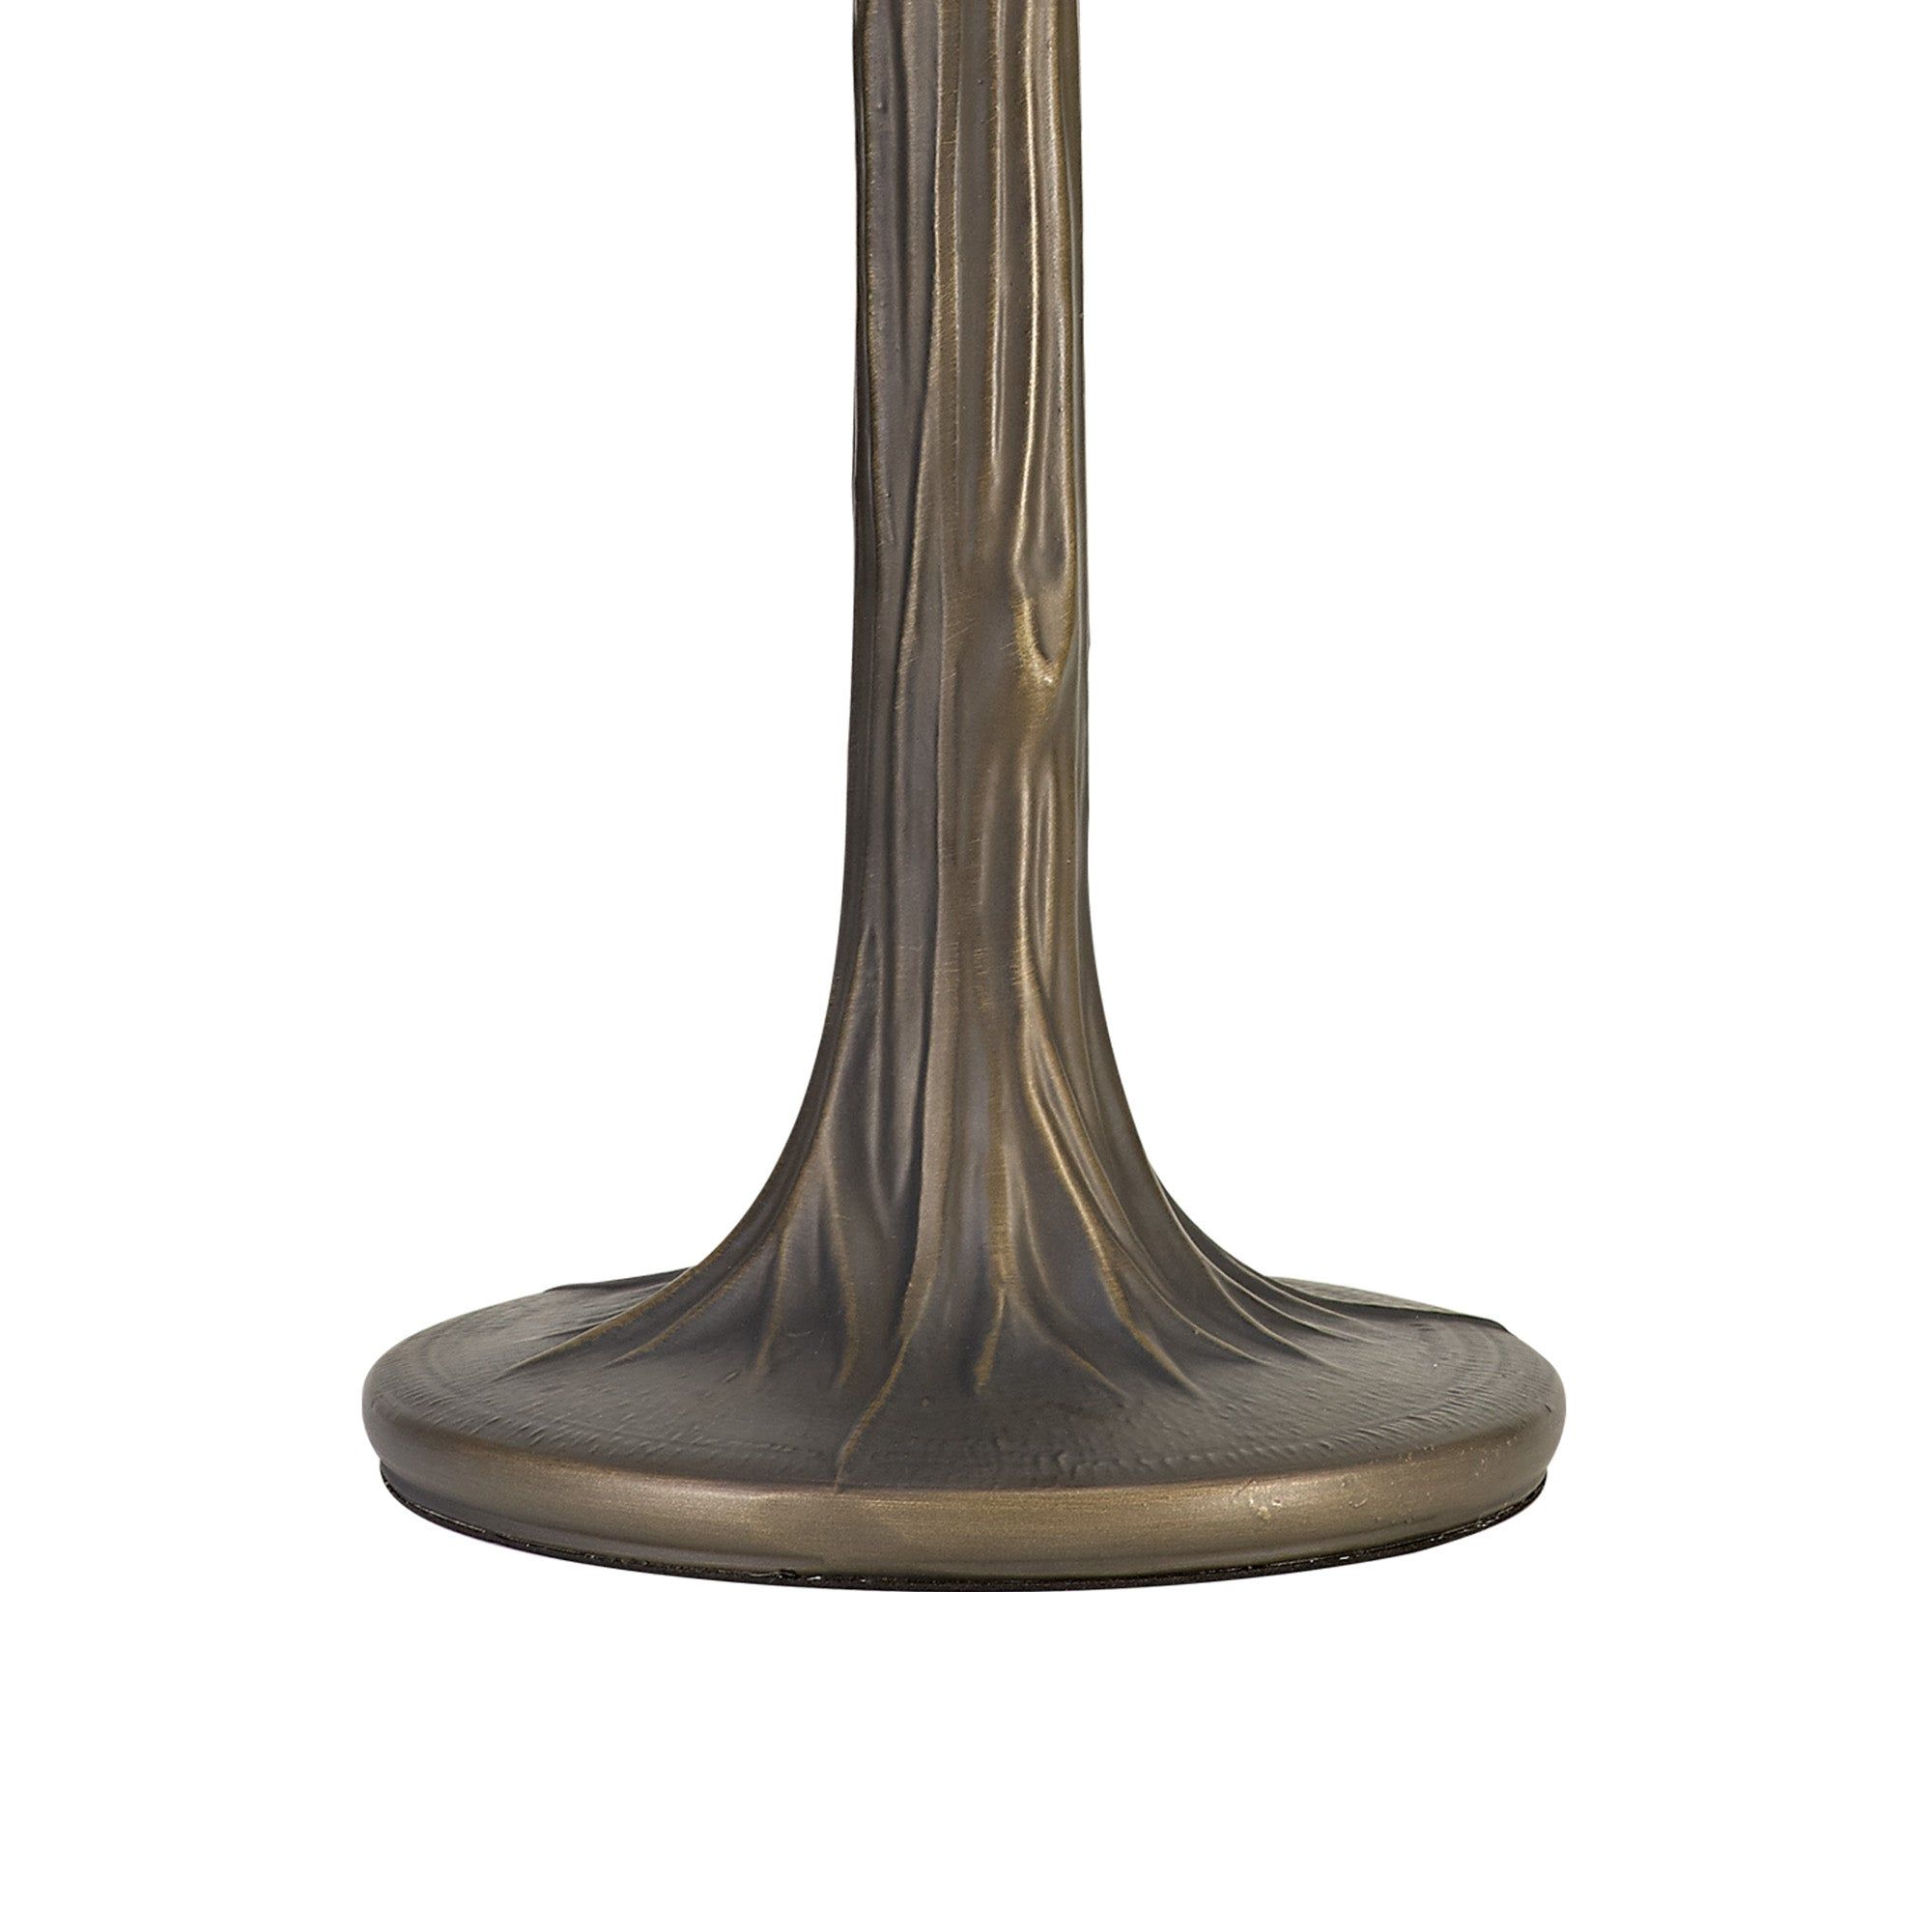 Nuflur 2 Light Tree Like Table Lamp E27 With 40cm Tiffany Shade, Antique Brass